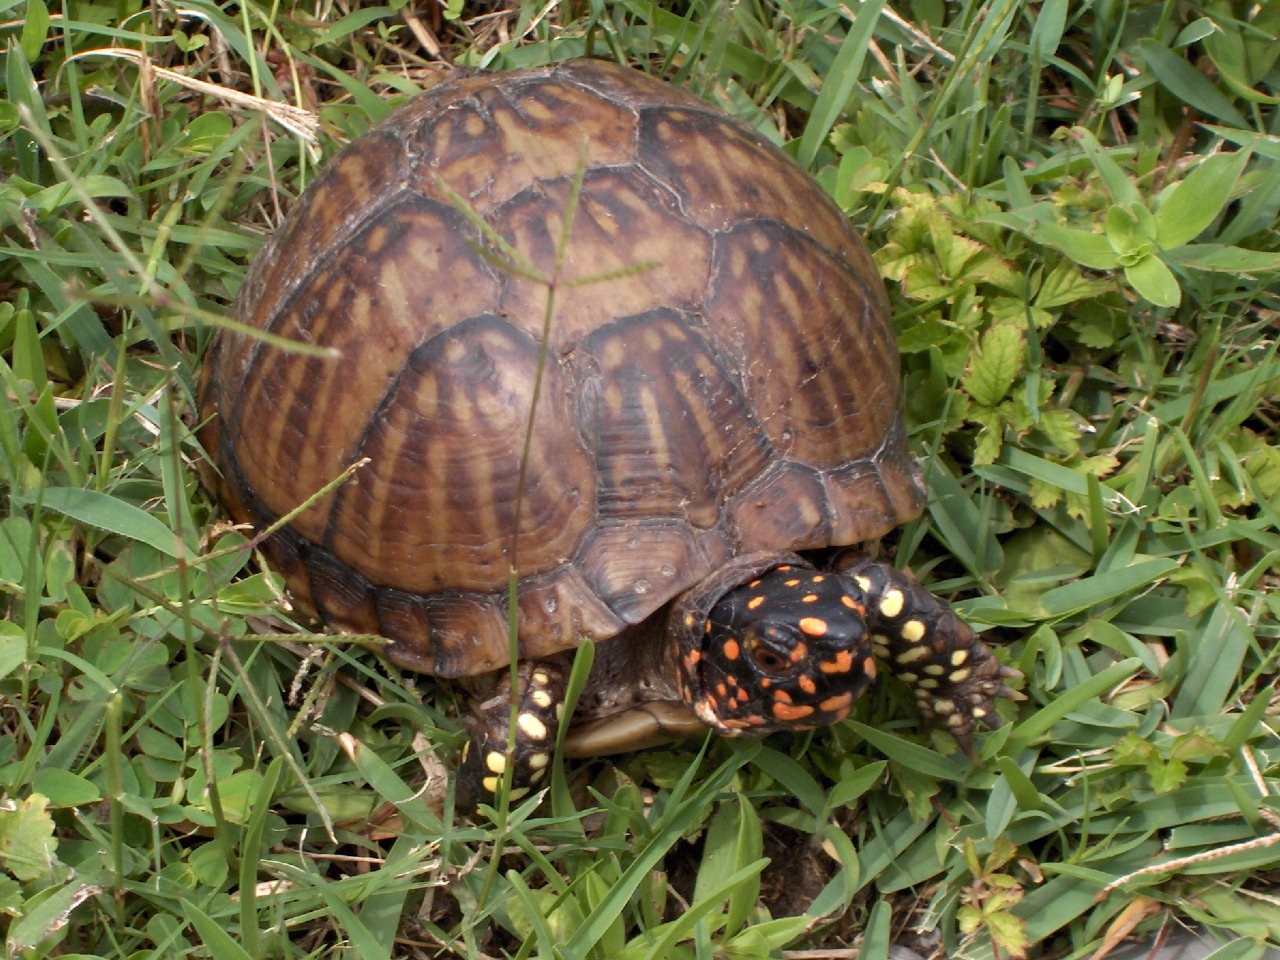 https://www.nps.gov/bith/learn/nature/images/eastern_box_turtle_Terrapene_carolina_ssp.JPG